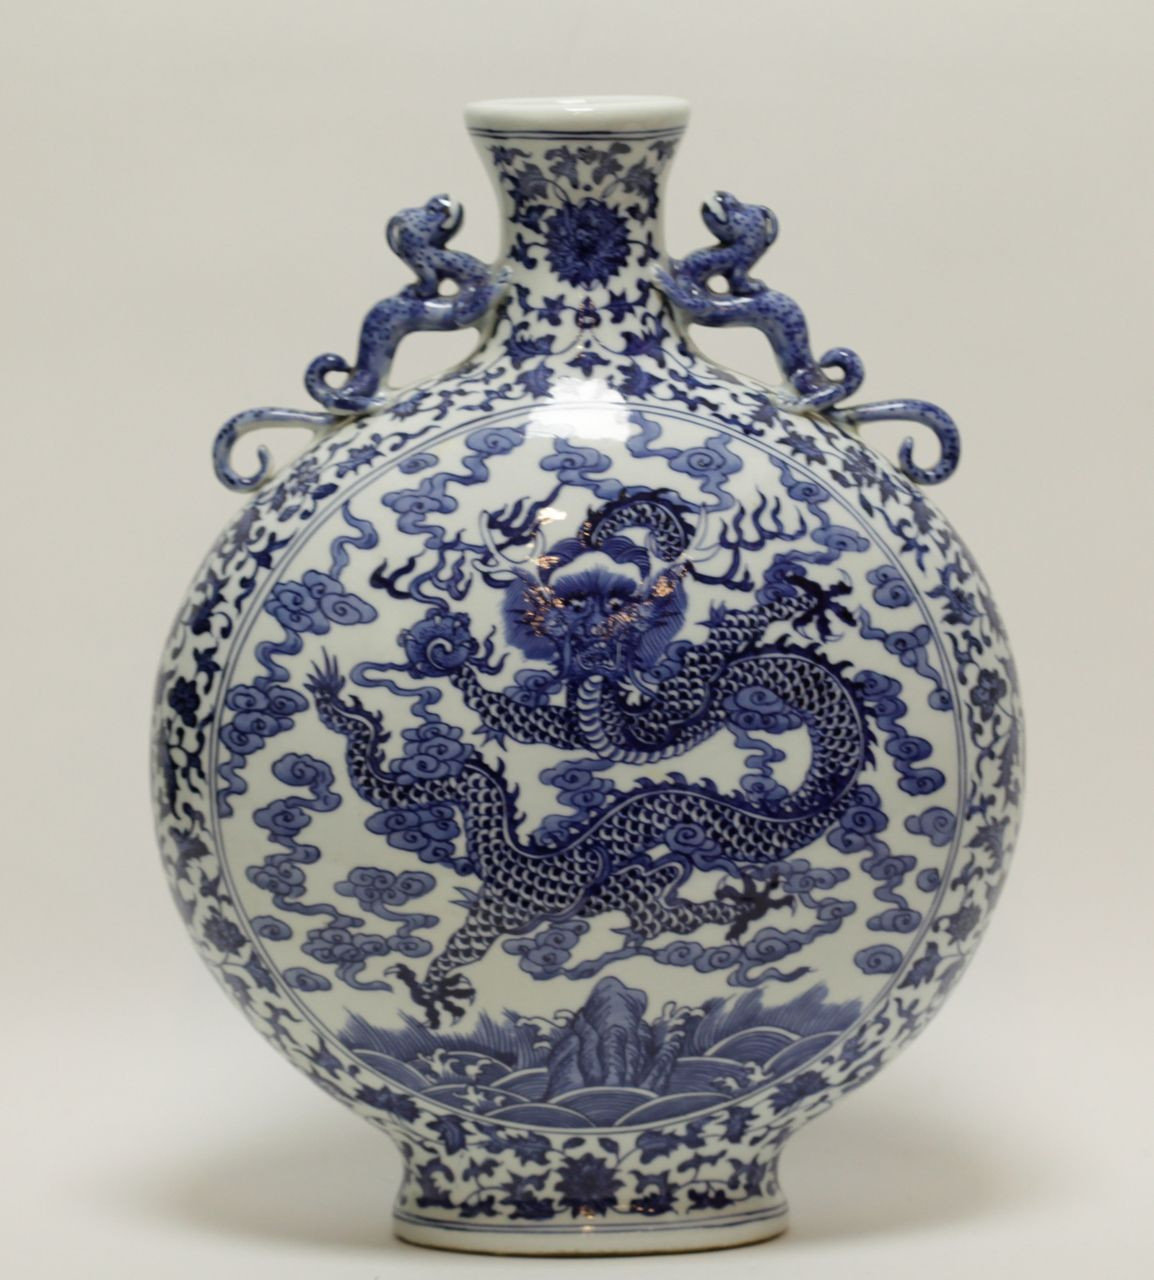 27 Unique Blue China Vase 2024 free download blue china vase of lot 337 s60 chinese blue white porcelain vase est 2000 3000 in lot 337 s60 chinese blue white porcelain vase est 2000 3000 antique reader